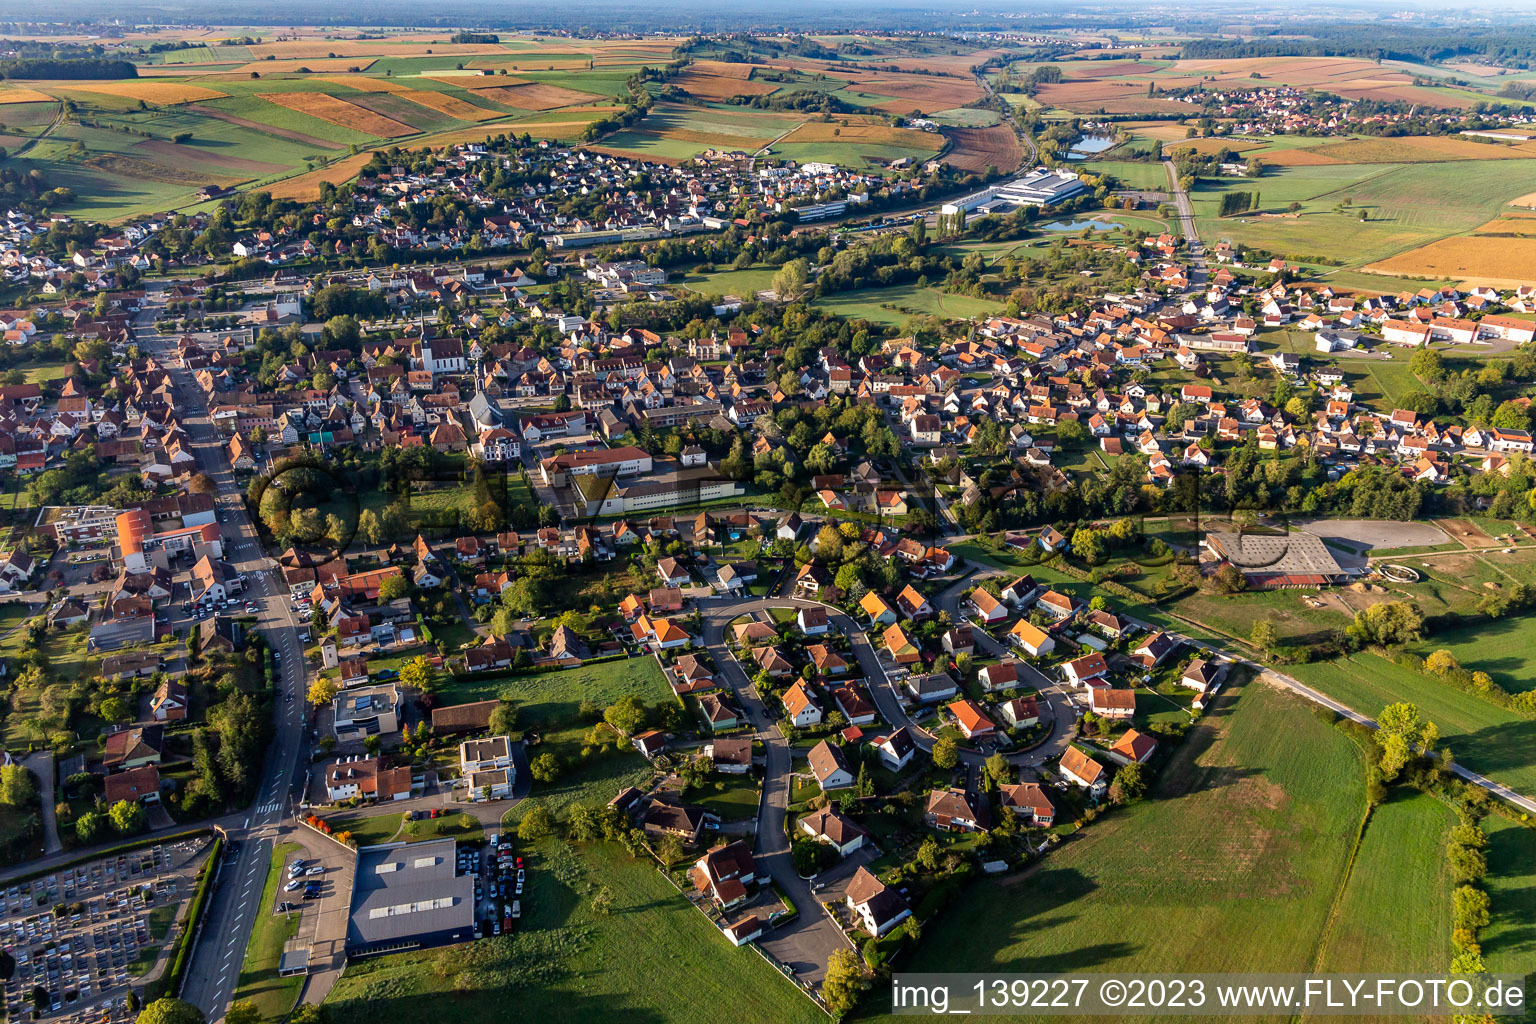 Luftbild von Soultz-sous-Forêts im Bundesland Bas-Rhin, Frankreich